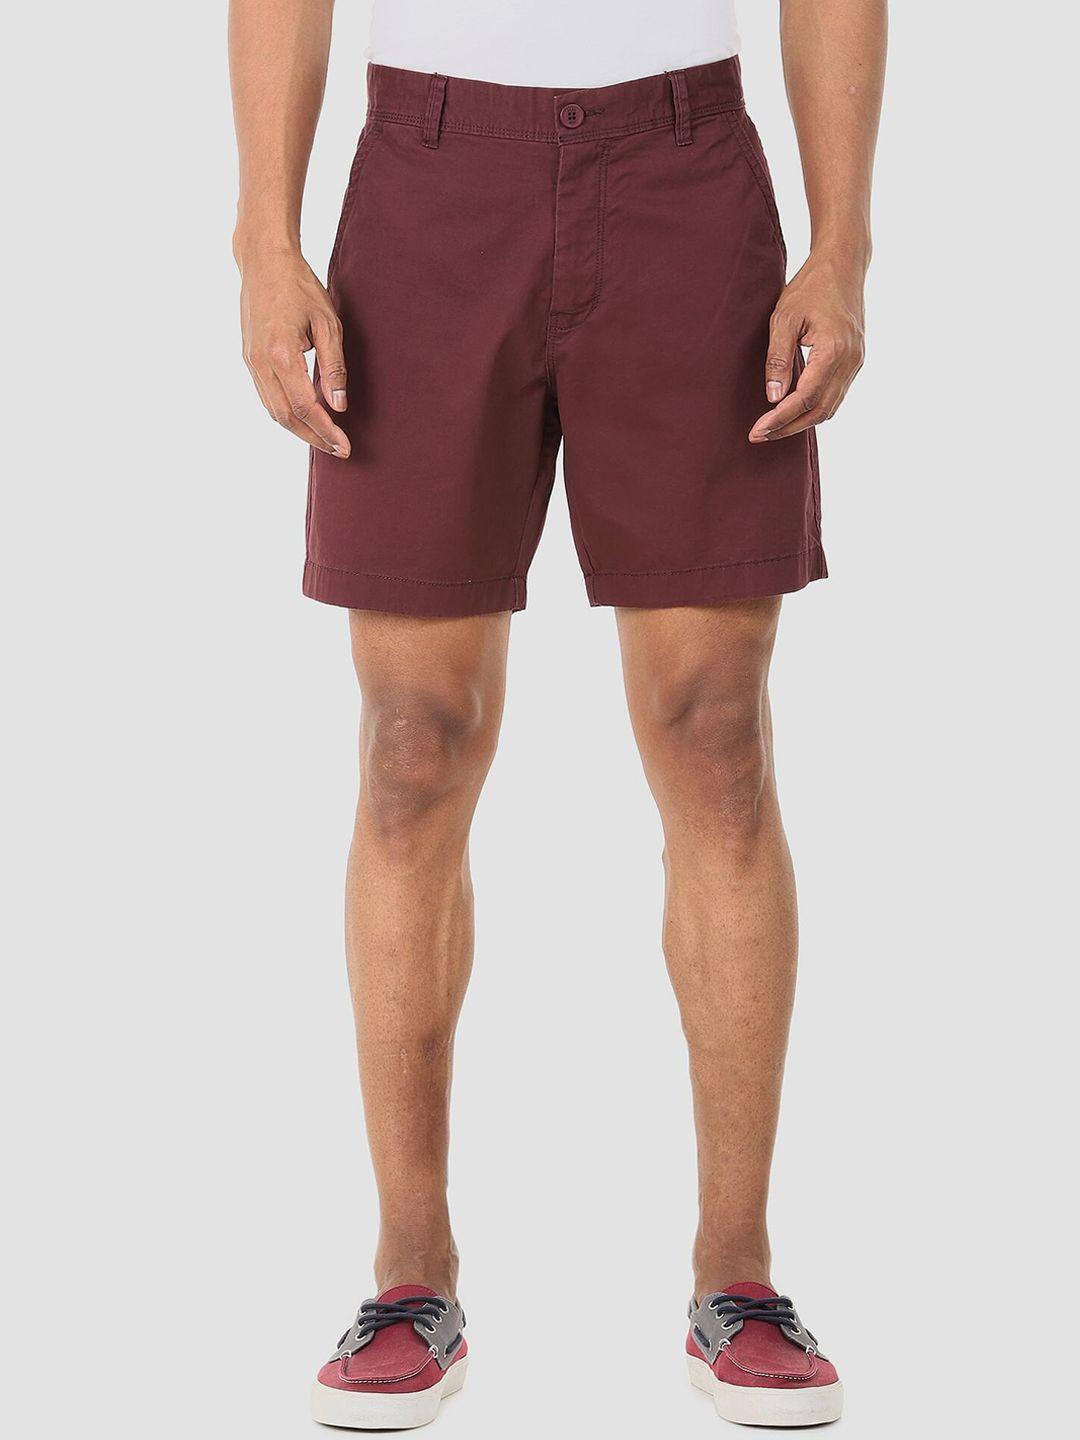 aeropostale-men-red-shorts